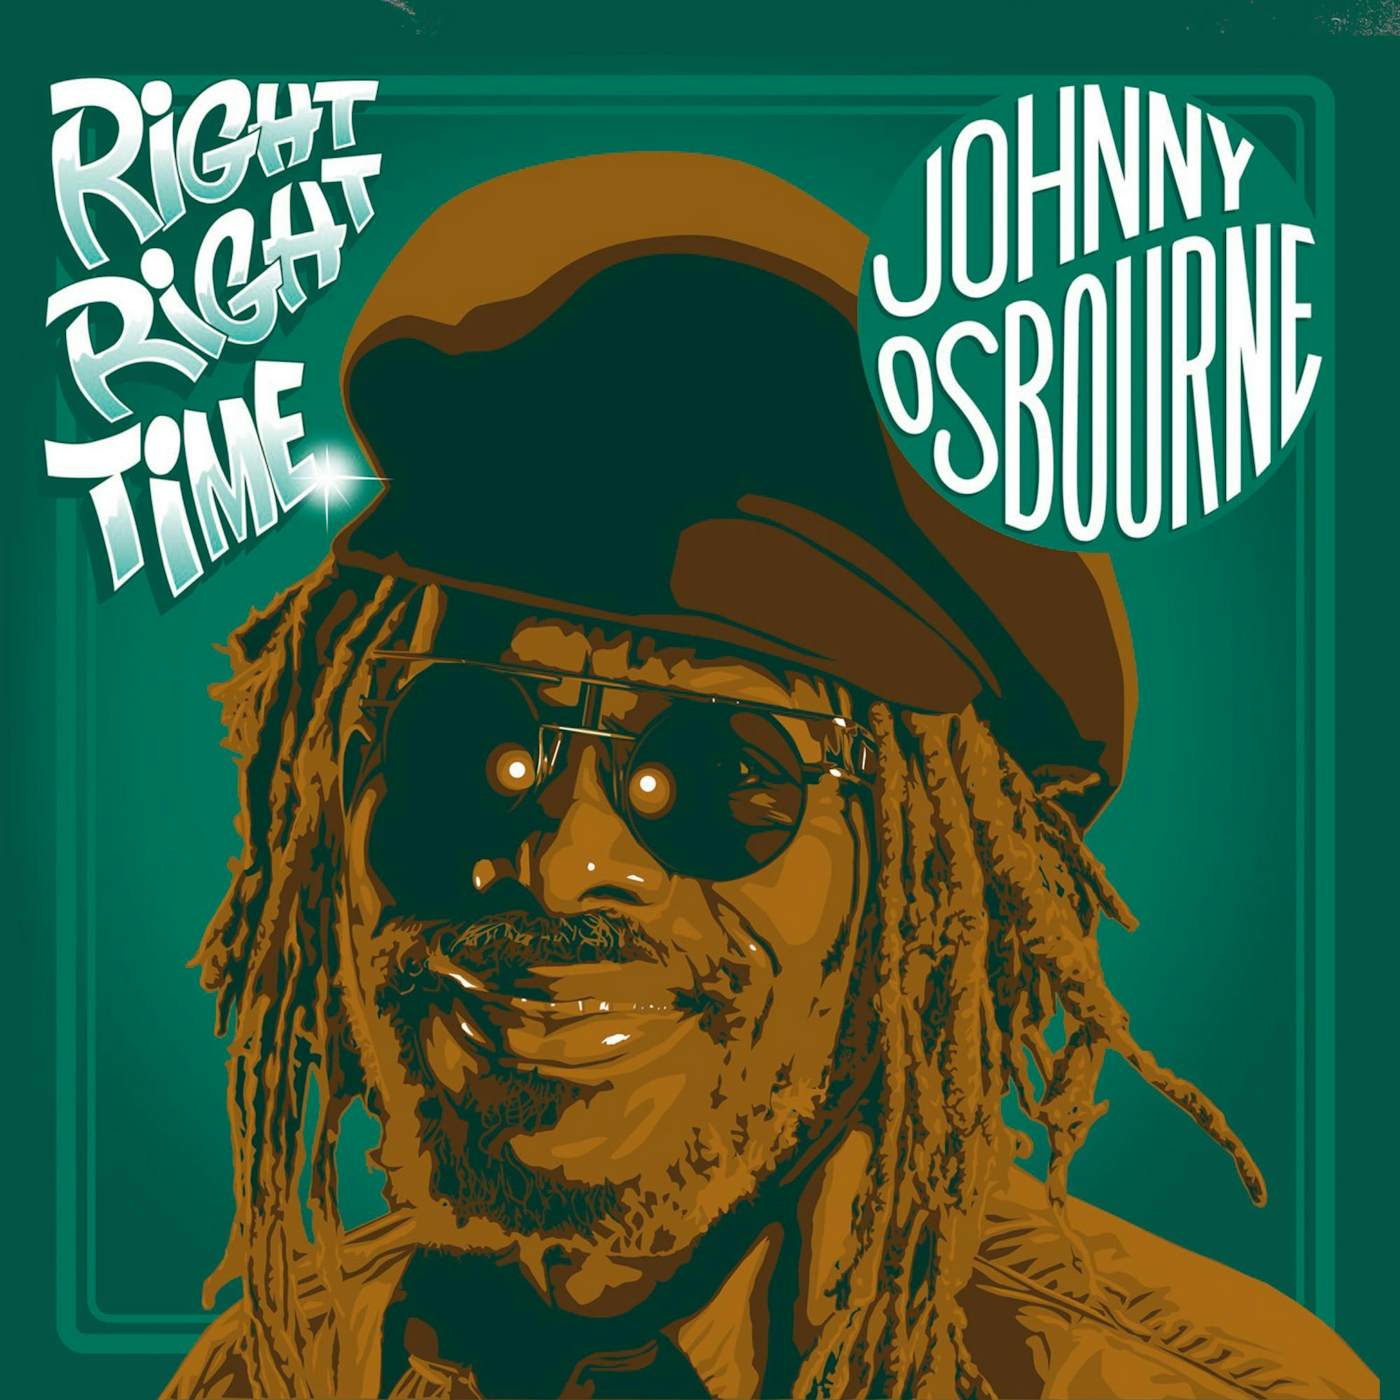 Johnny Osbourne Right Right Time Vinyl Record